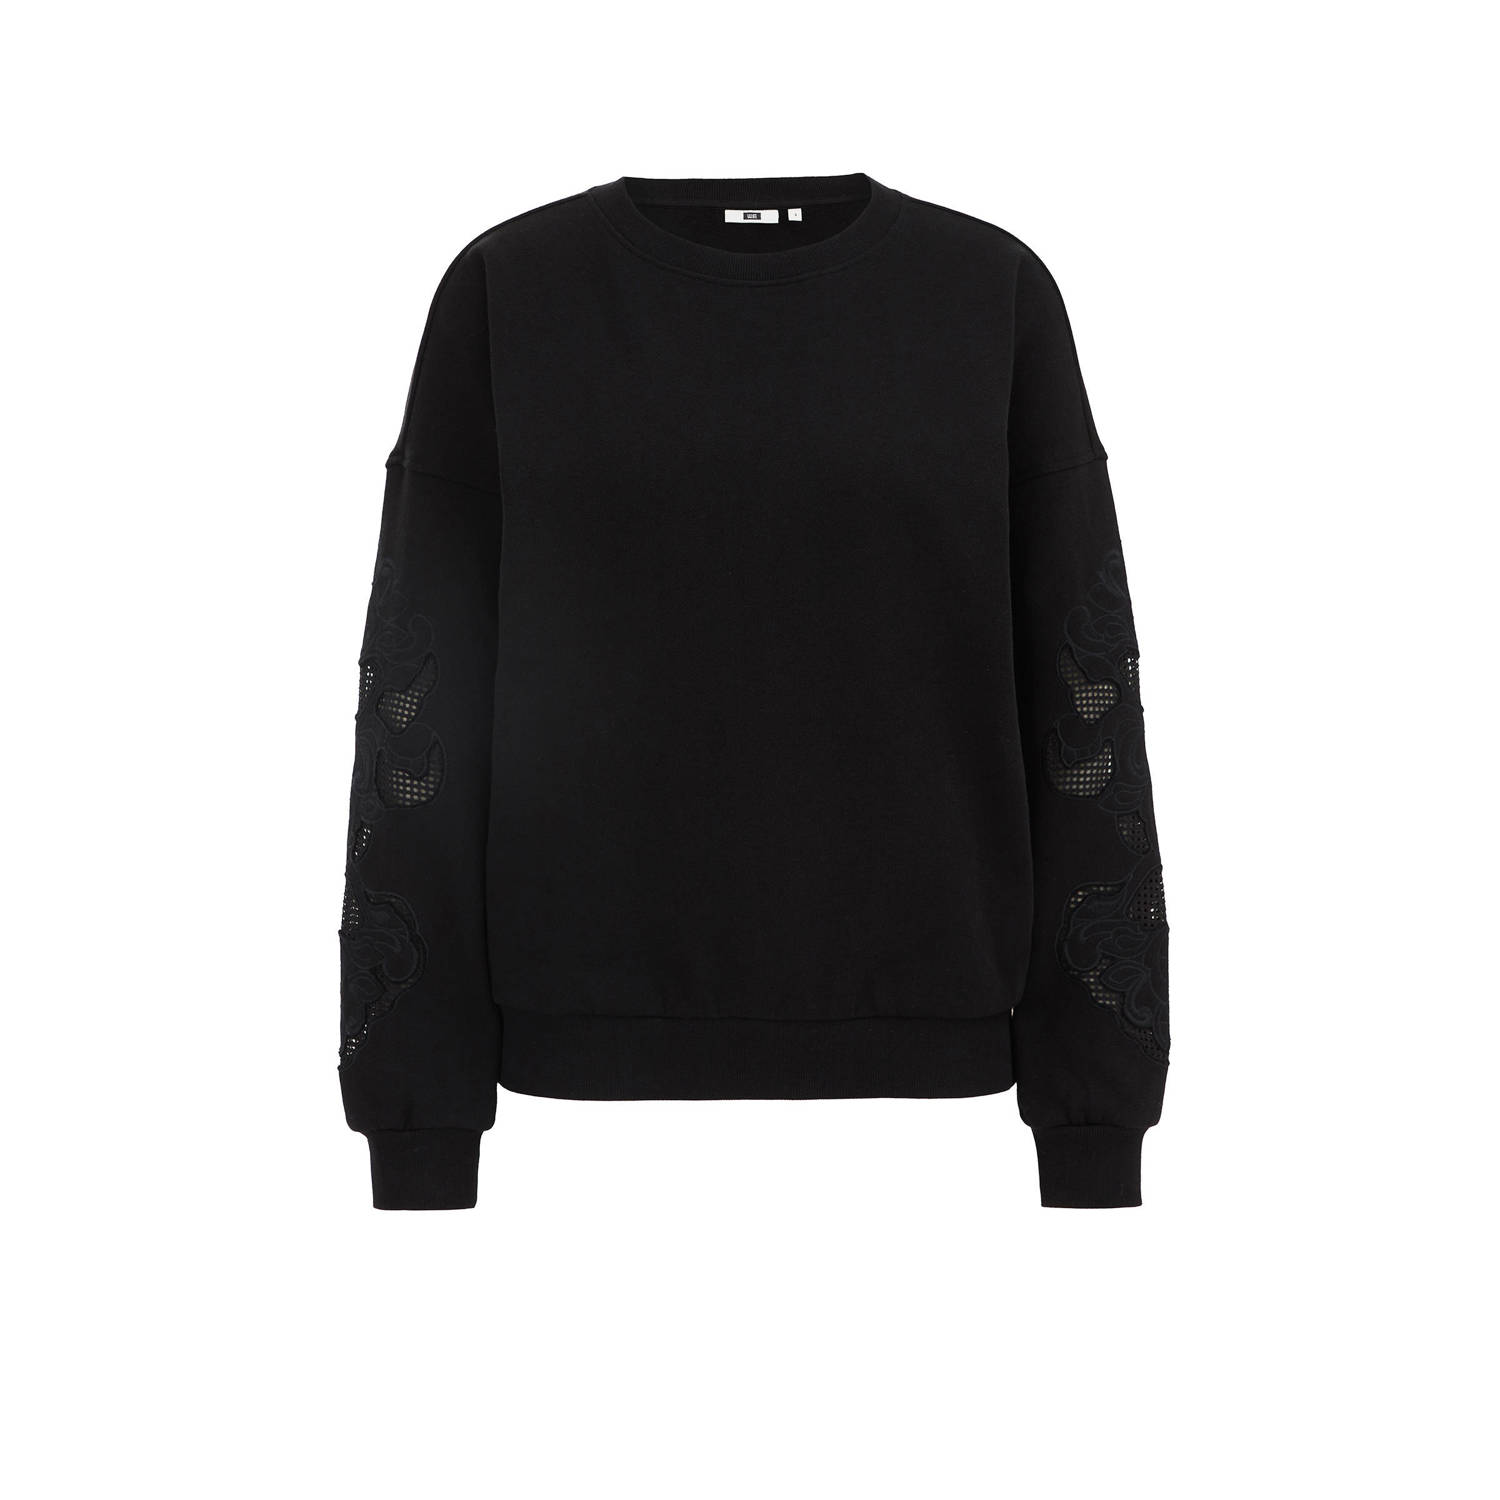 WE Fashion sweater zwart